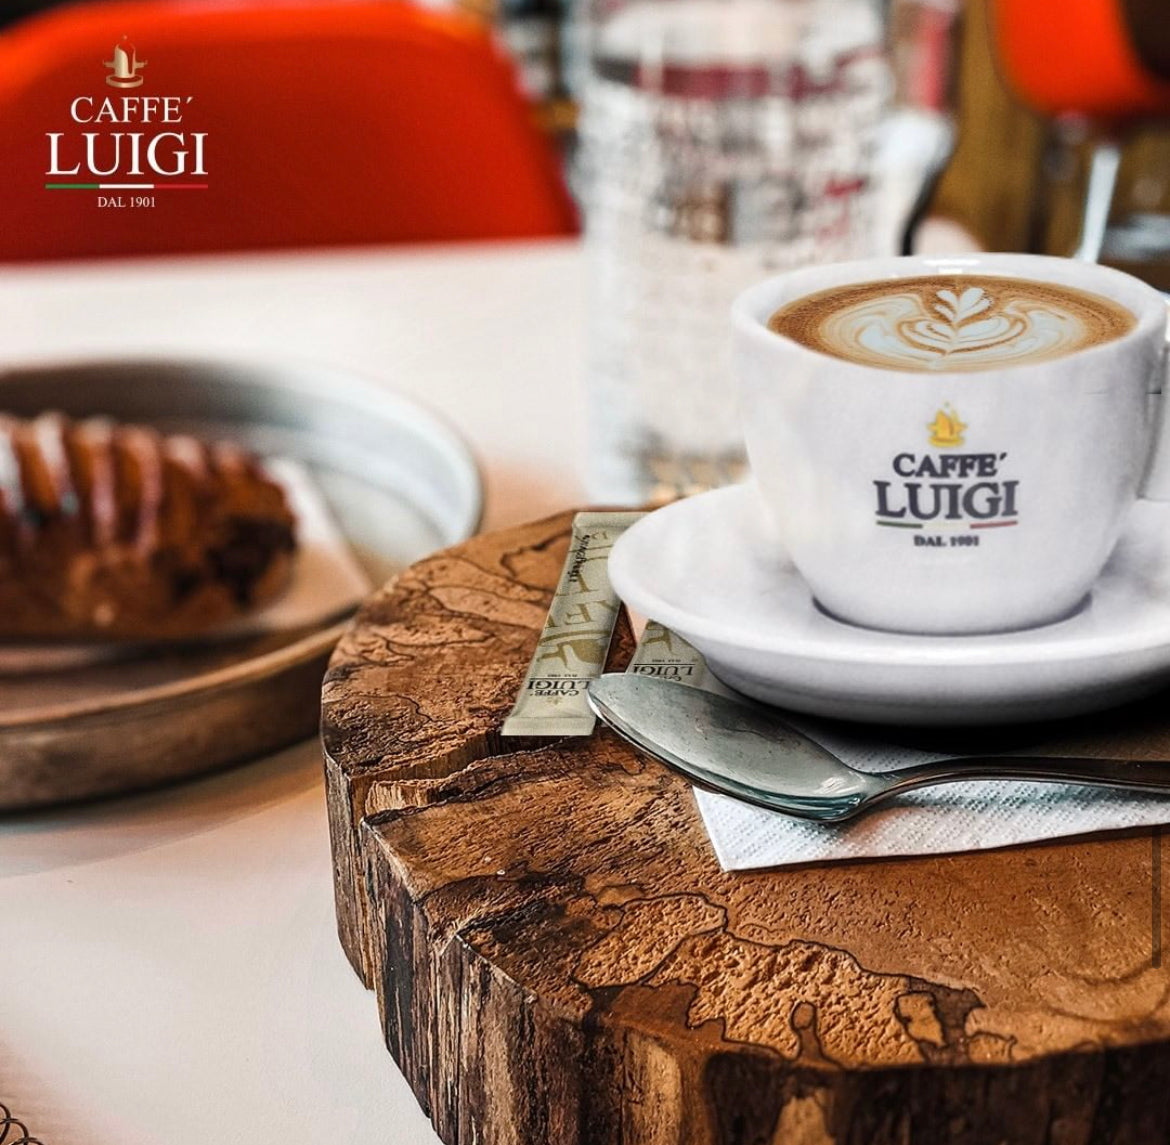 Espresso DOLCE Bohnen Beans 1Kg Caffe 'Luigi 100% Arabica + 1 Cappuccino Tasse Doppelt